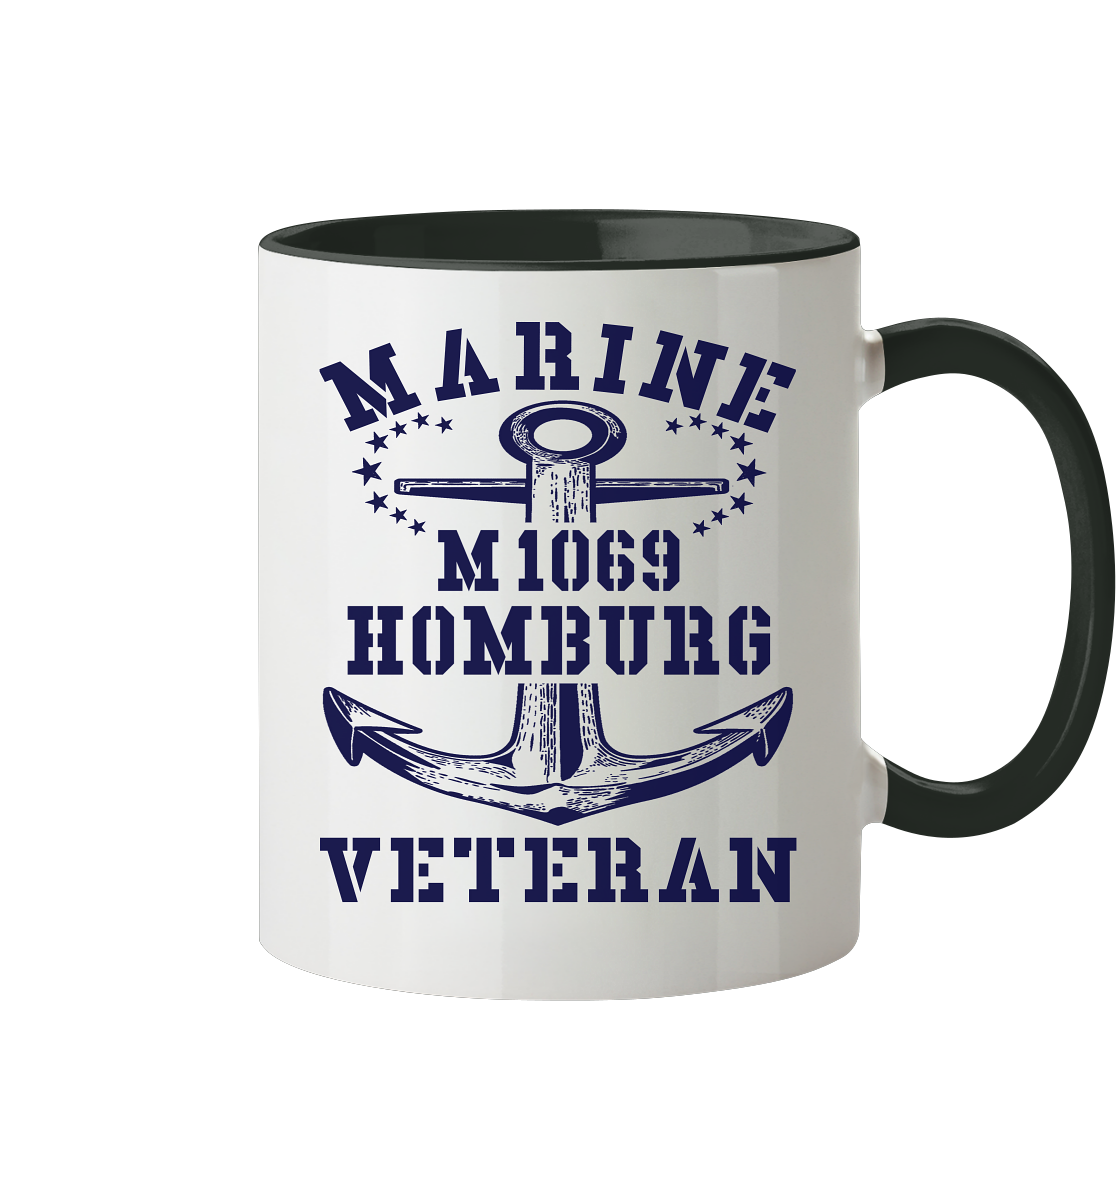 Mij.-Boot M1069 HOMBURG Marine Veteran - Tasse zweifarbig